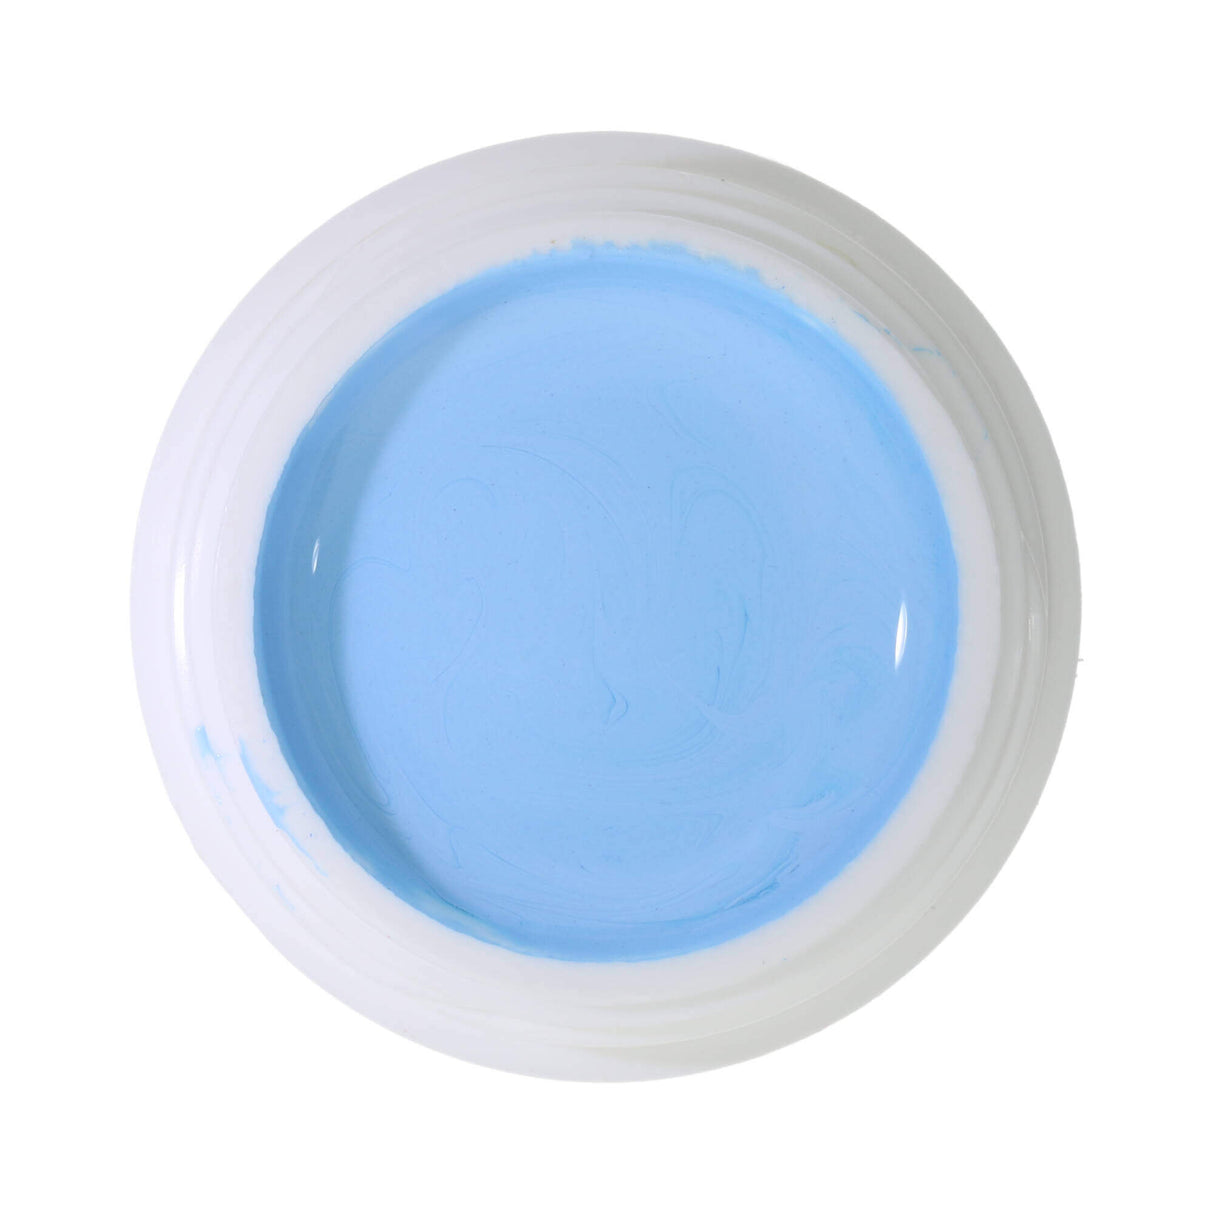 # 912 Premium-PURE Color Gel 5ml màu xanh lam nhạt